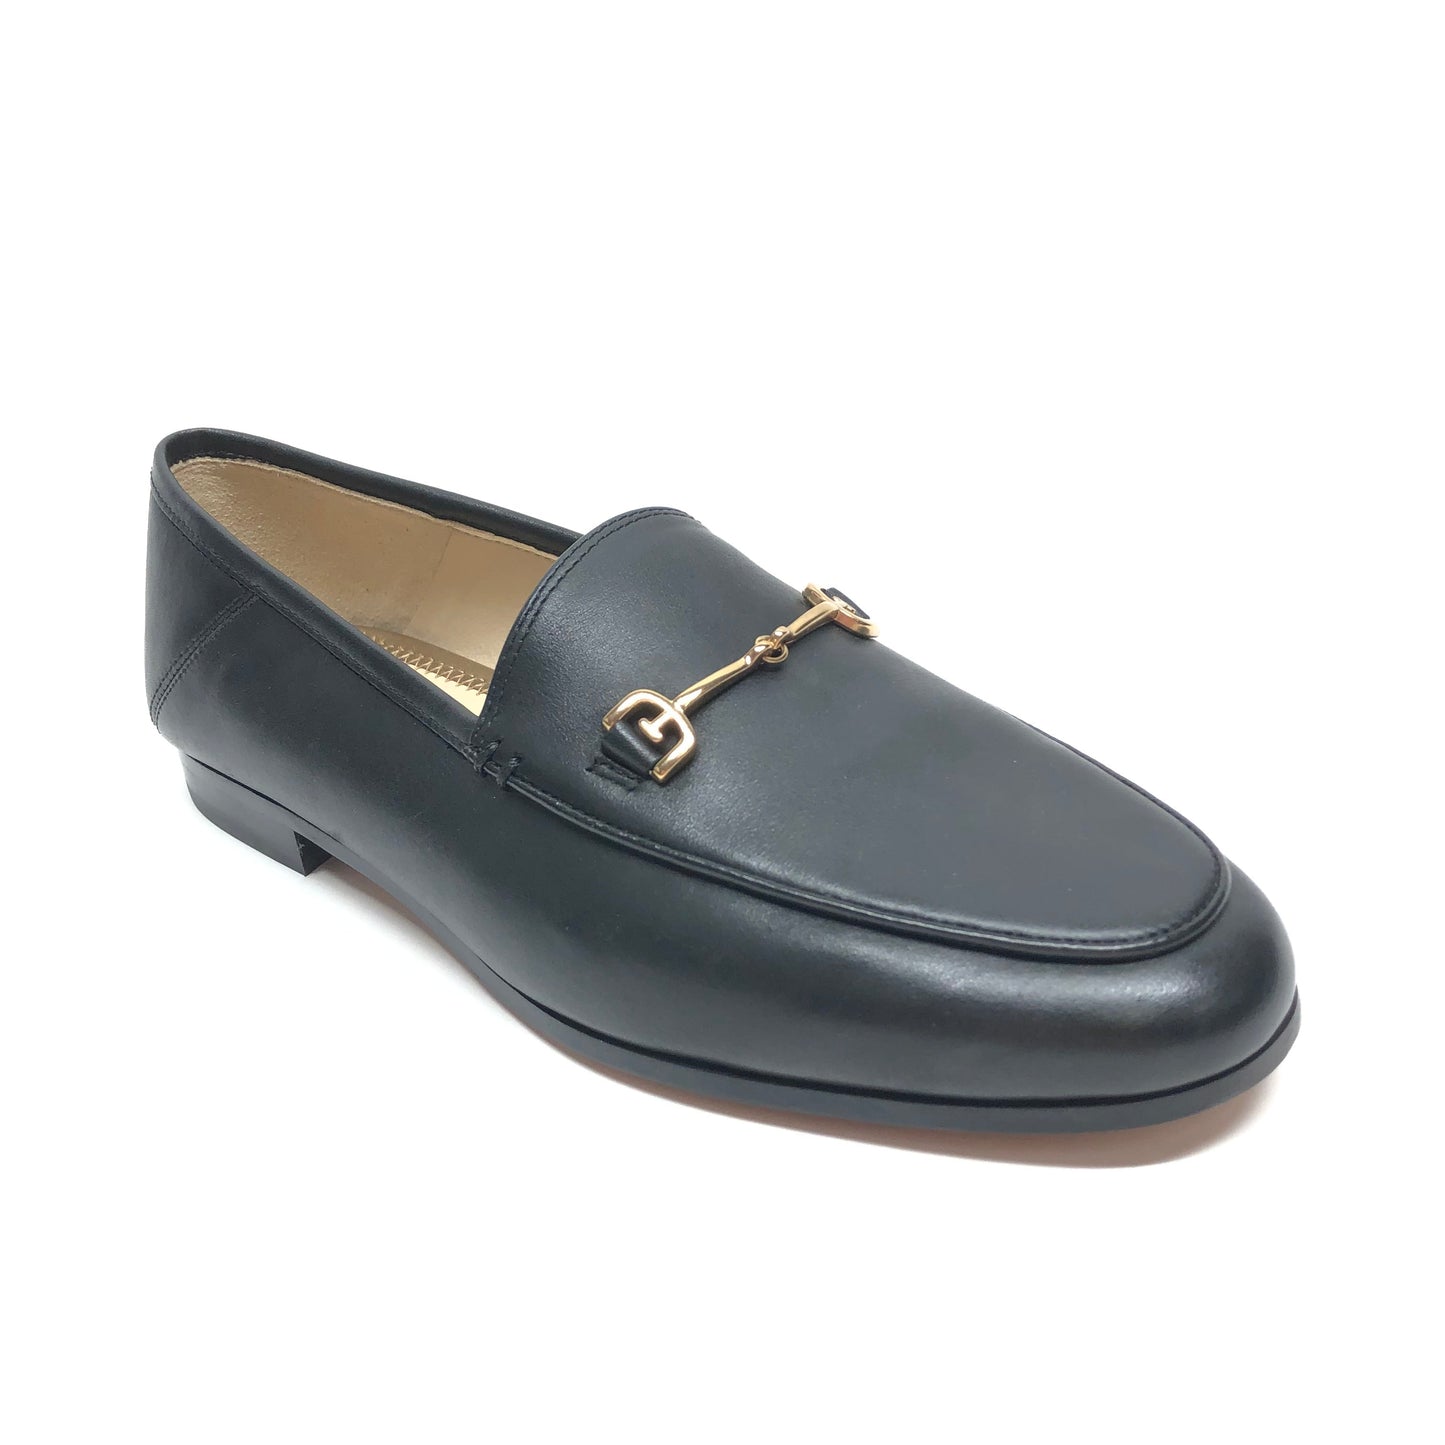 Black Shoes Flats Sam Edelman, Size 6